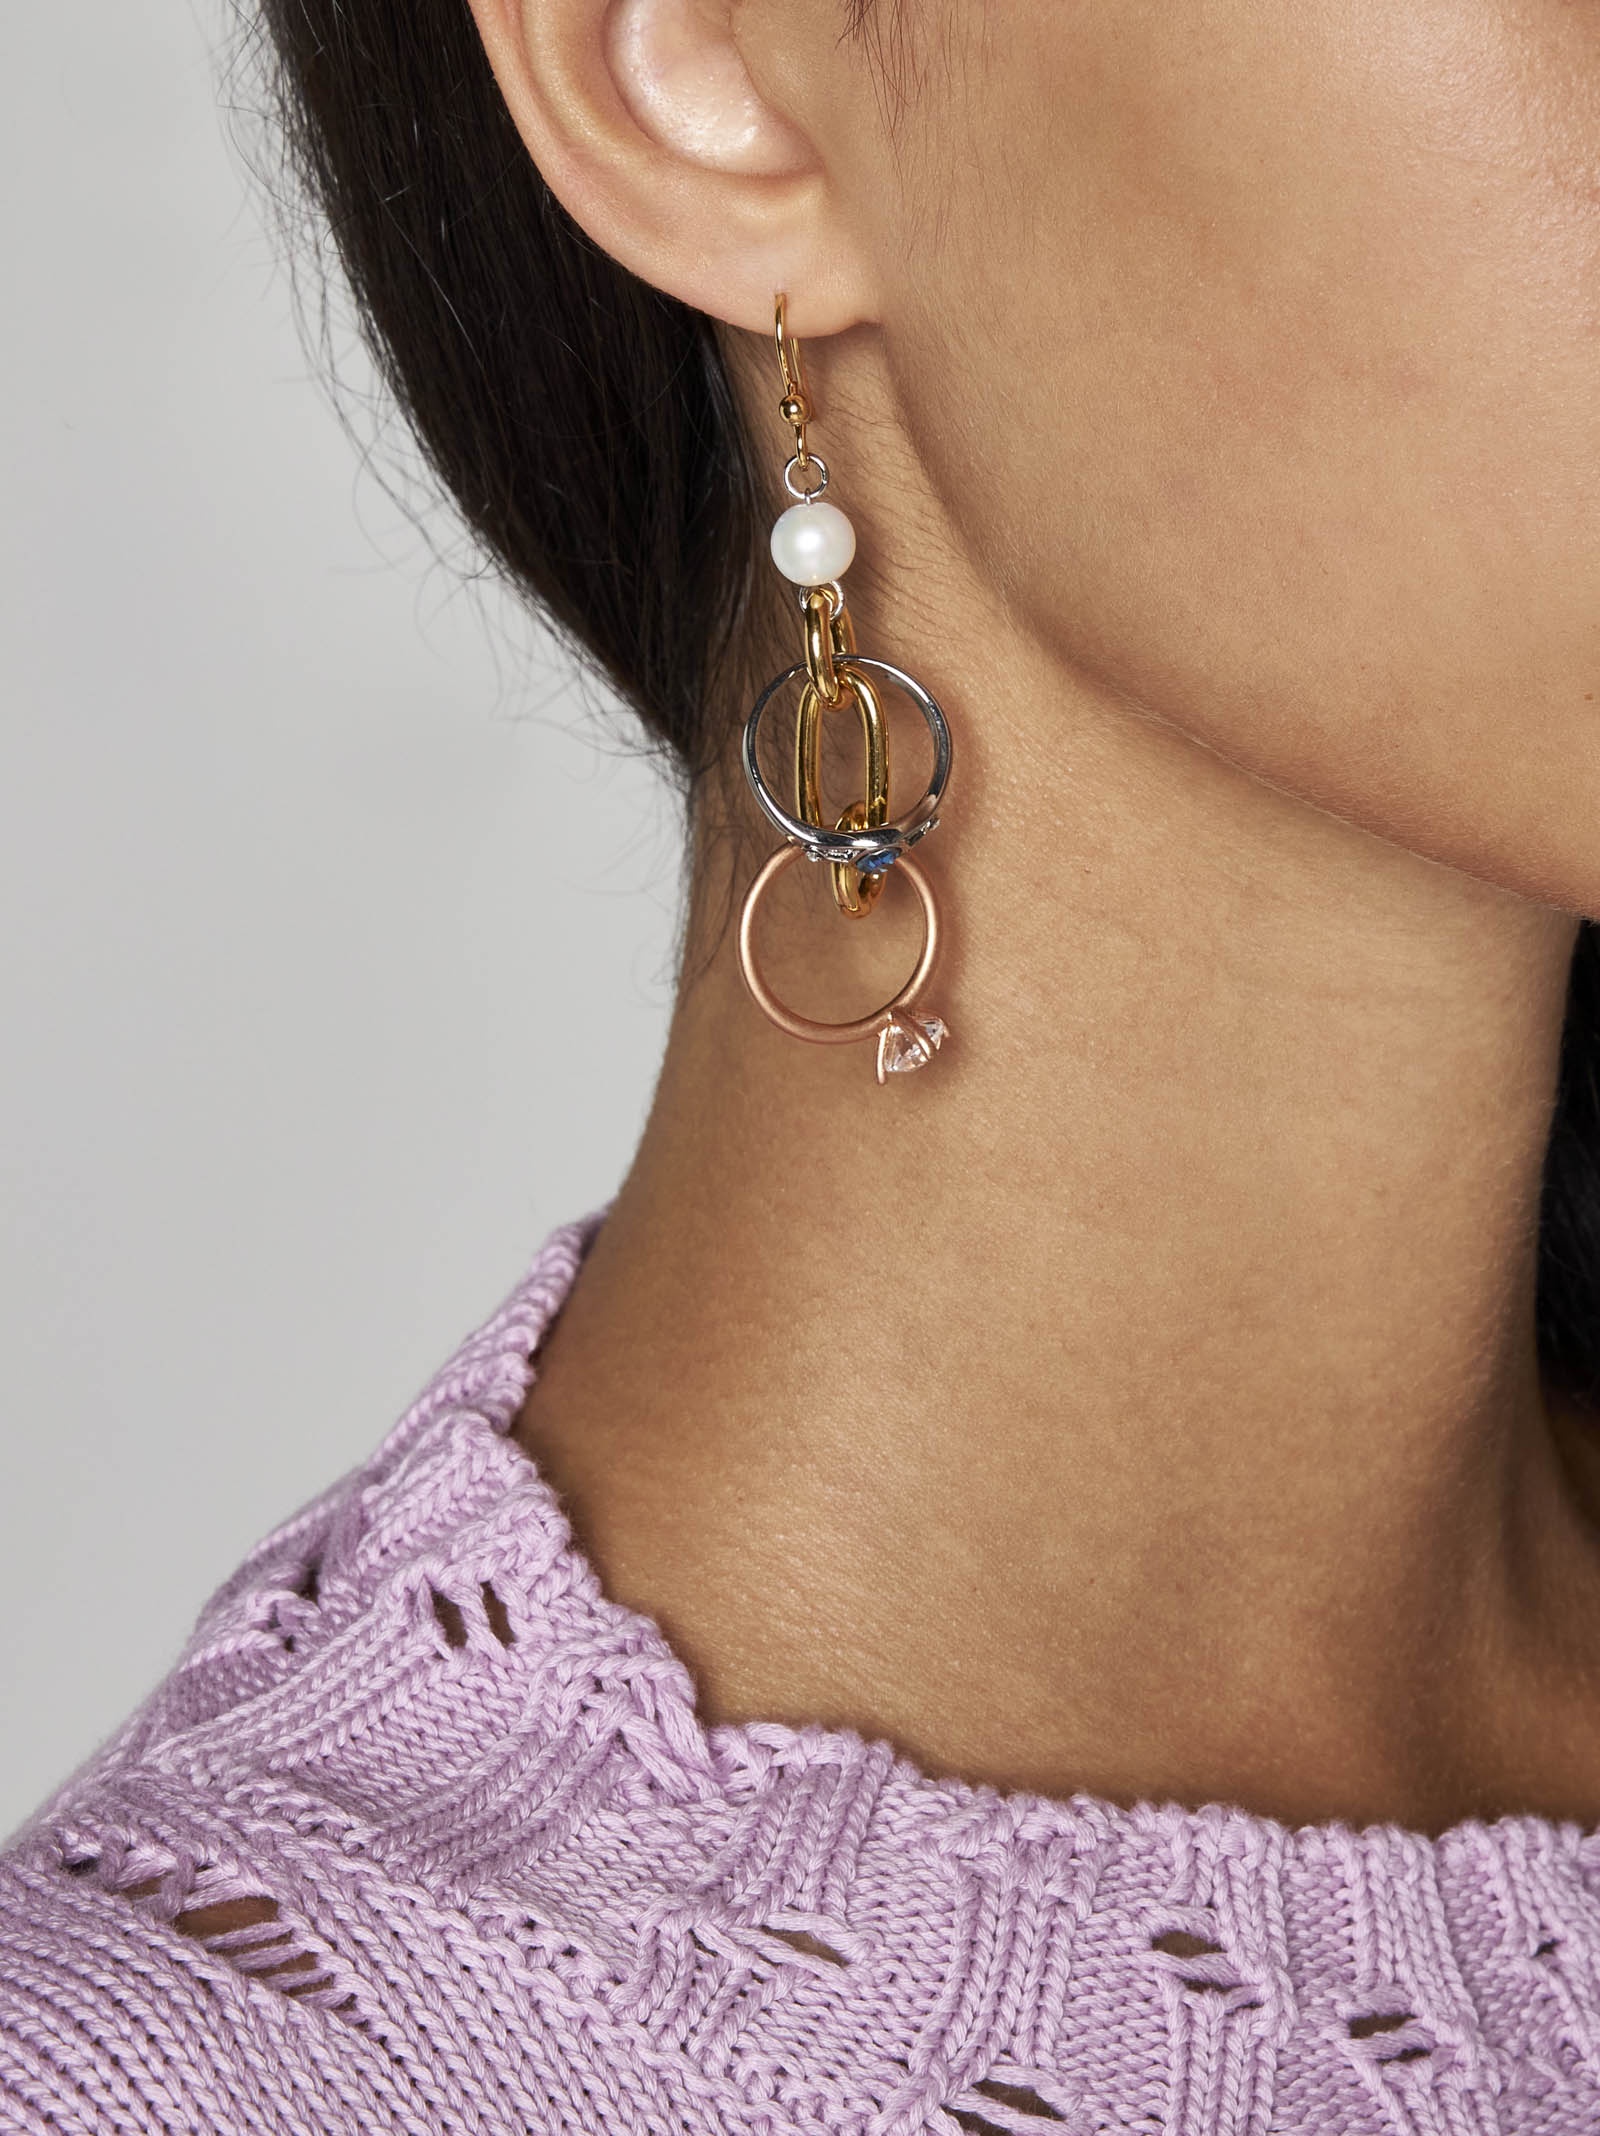 Pearl and pendant earrings - 2